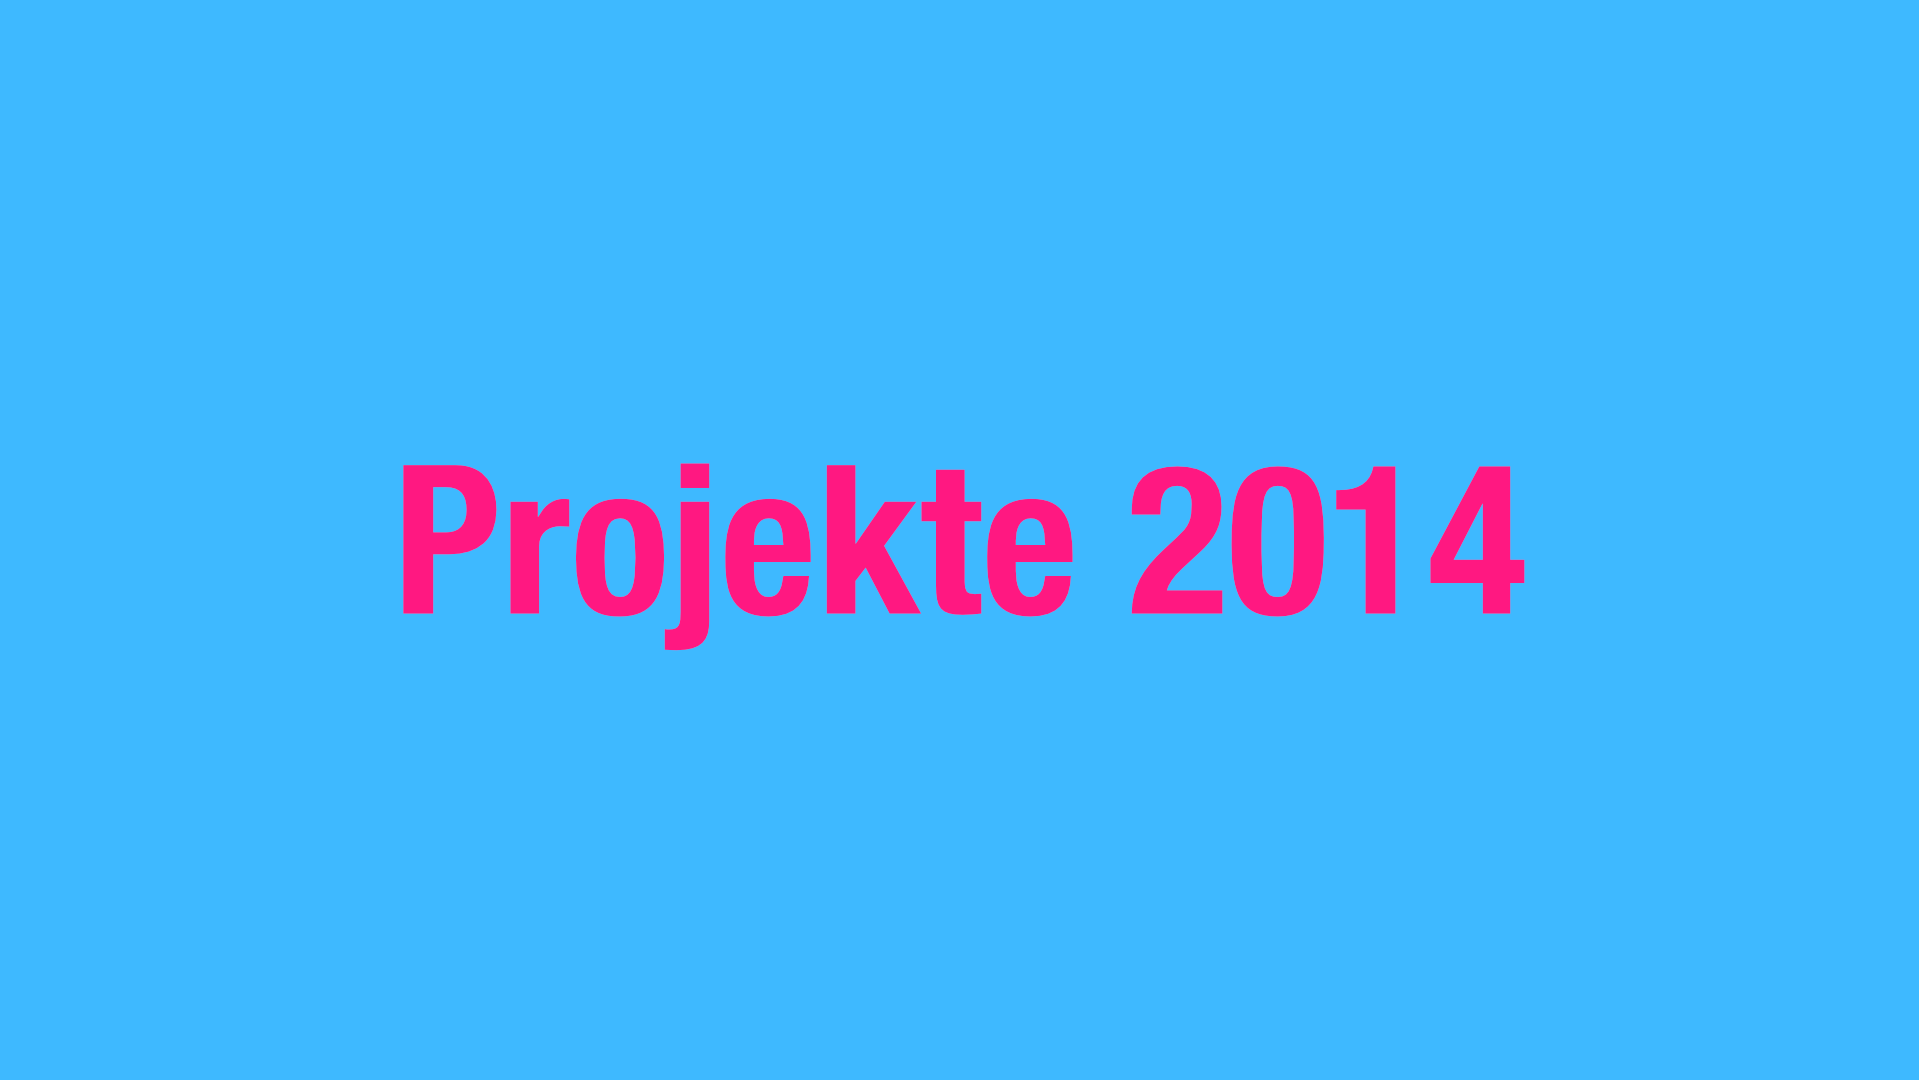 Projekte 2014